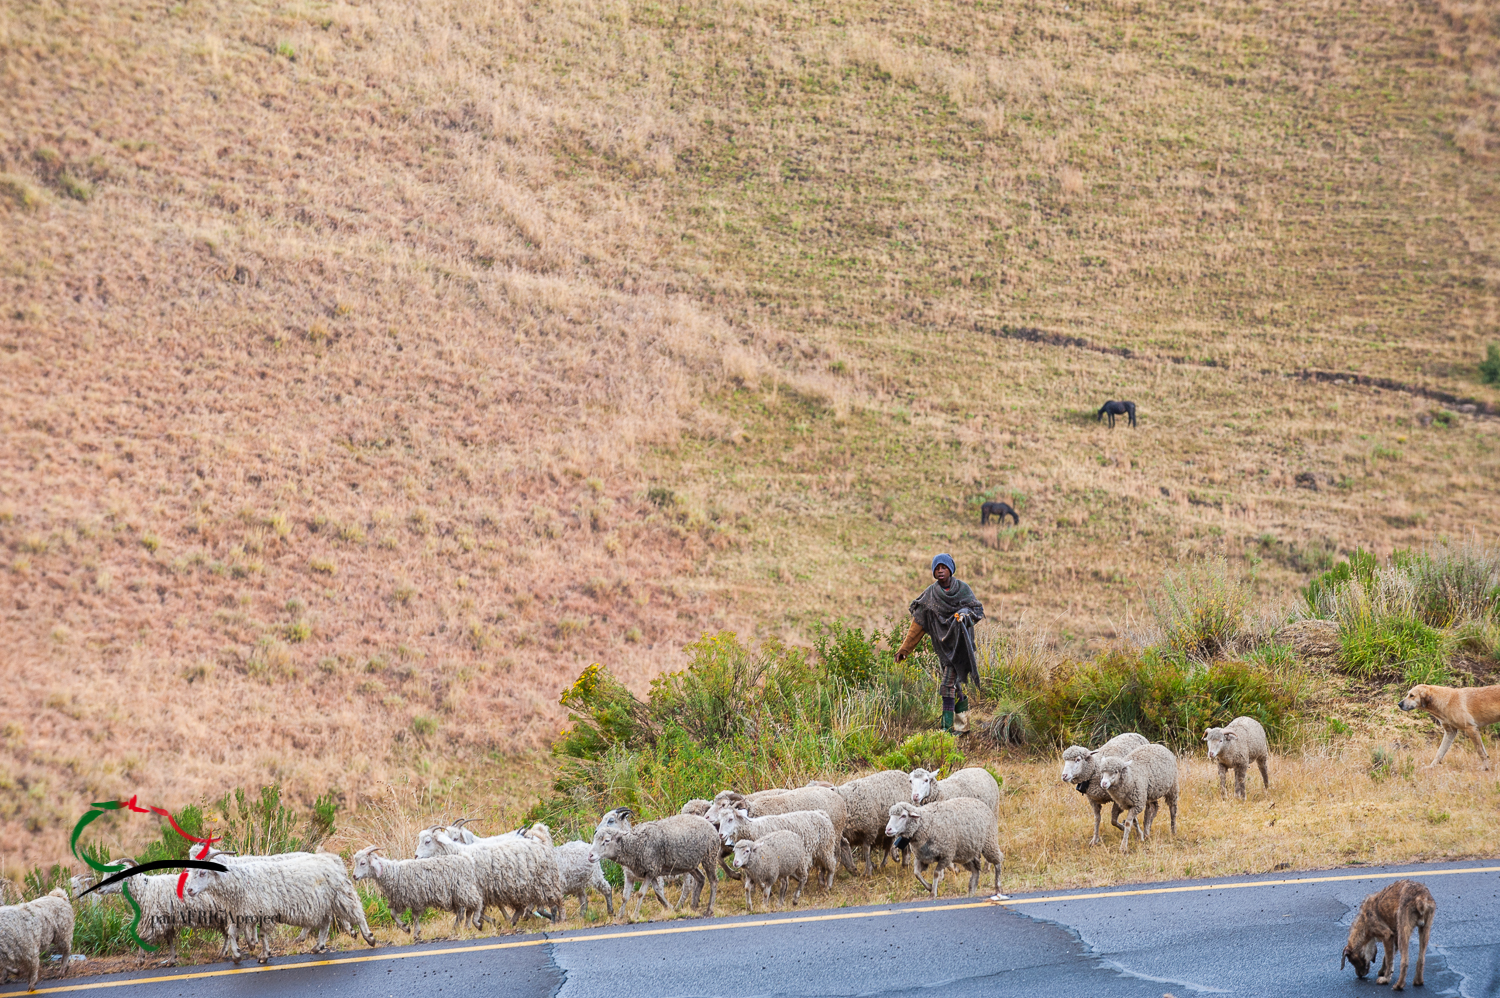 Man herding sheep across the road